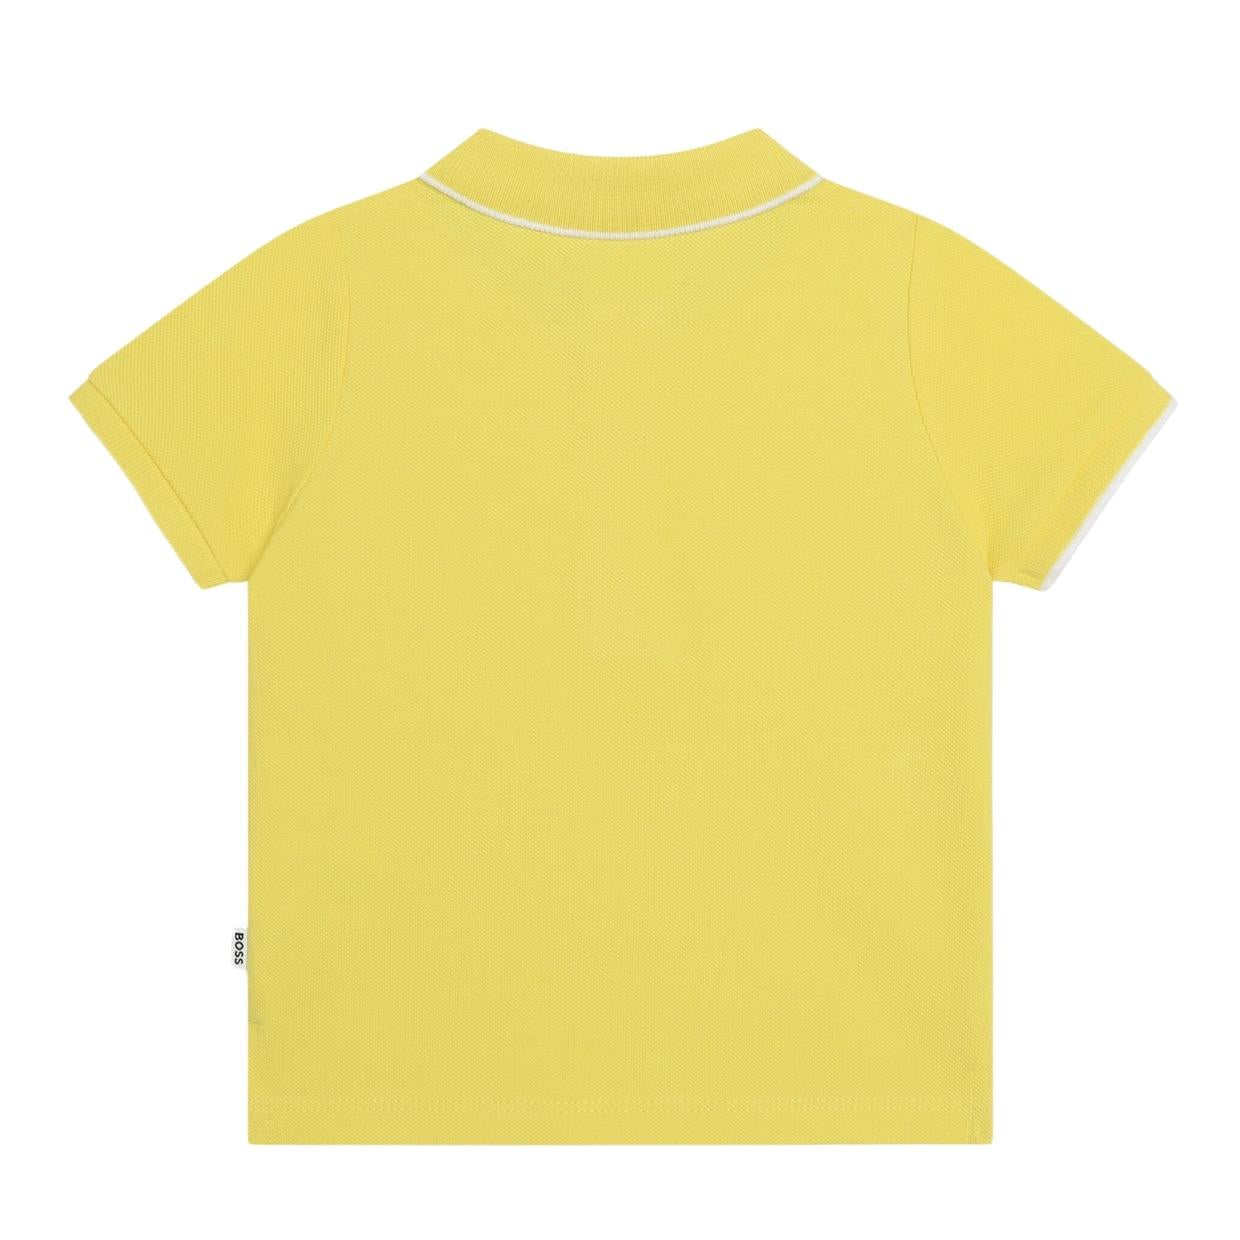 BOSS Baby Print Logo Short Sleeve Yellow Polo Shirt